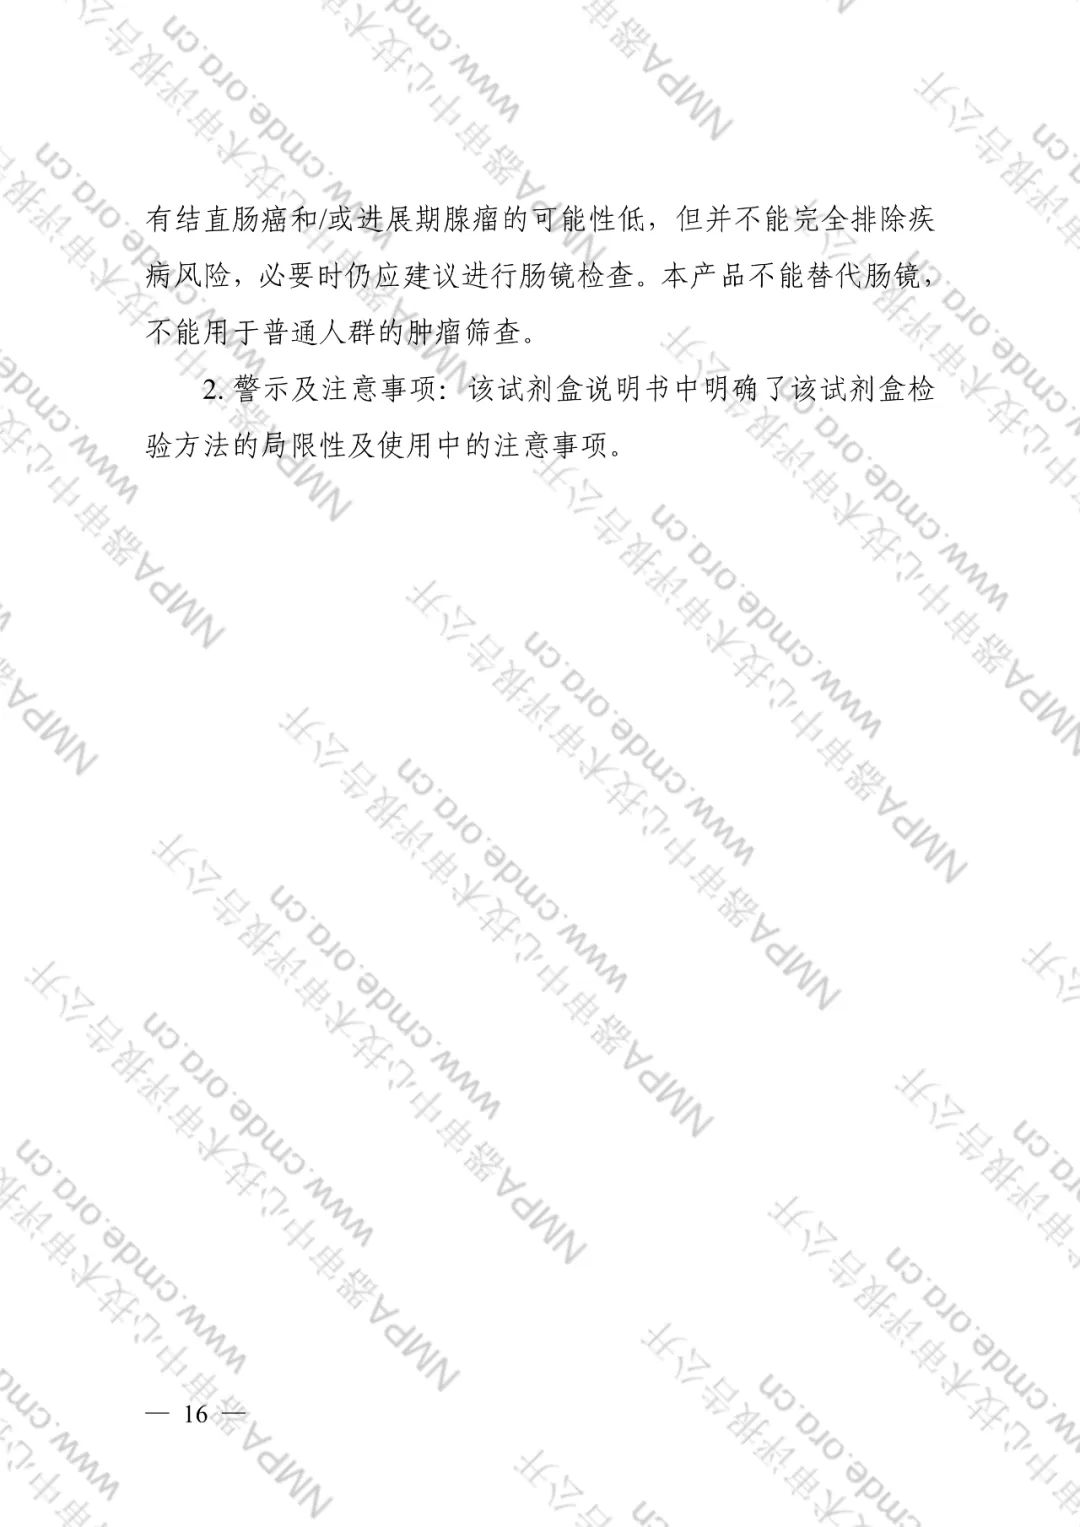 CMDE公布了艾长康®技术审评报告